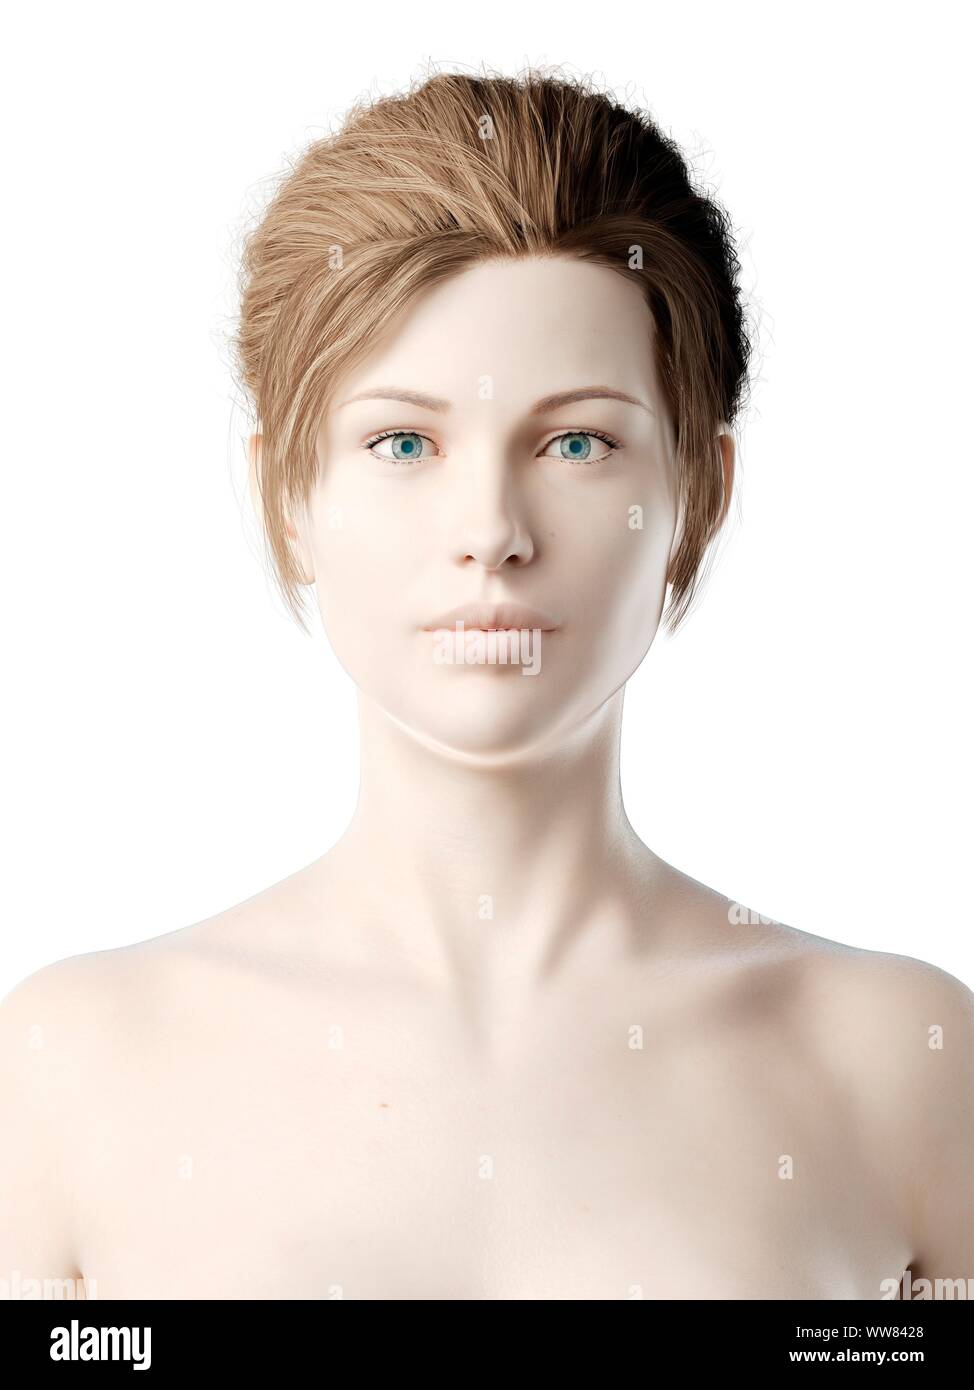 Female head, illustration Stock Photo